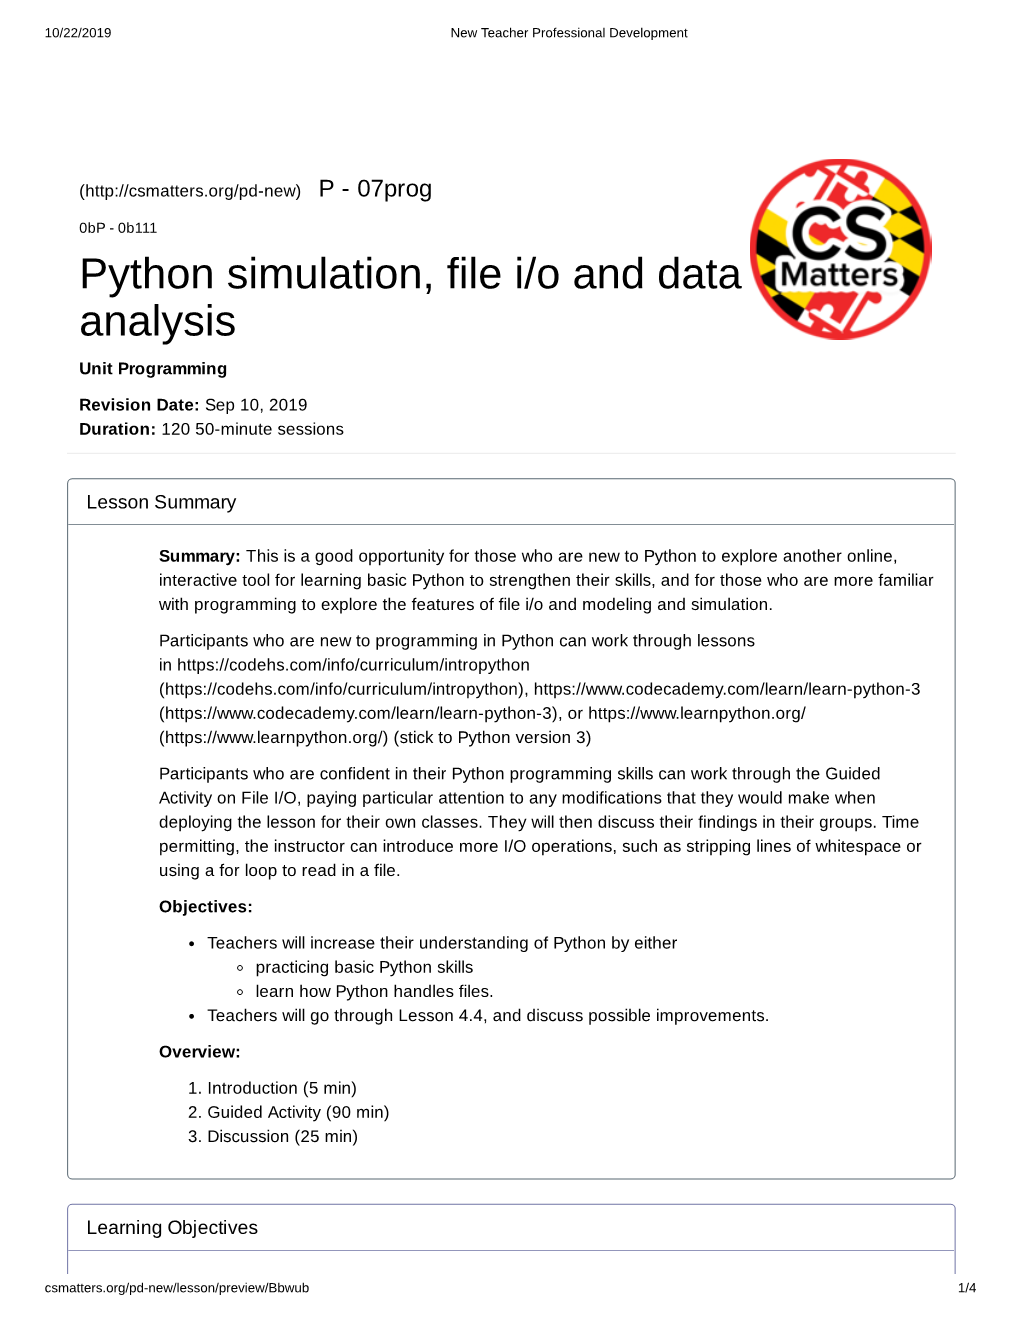 Python Simulation, File I/O and Data Analysis Unit Programming